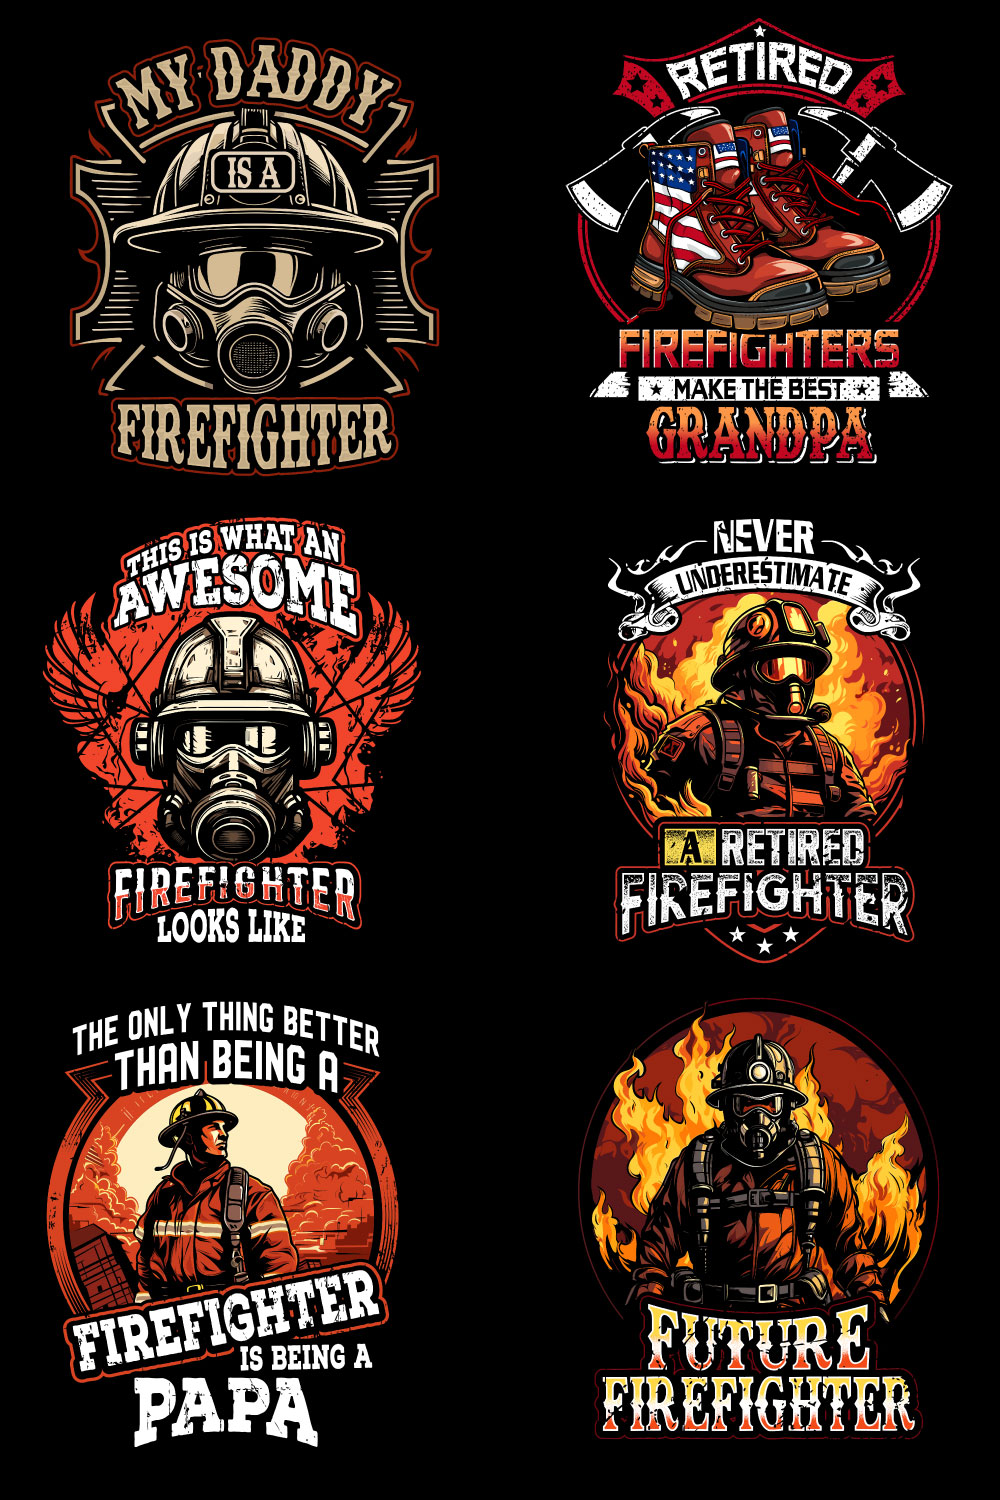 Firefighter t shirt design pinterest preview image.